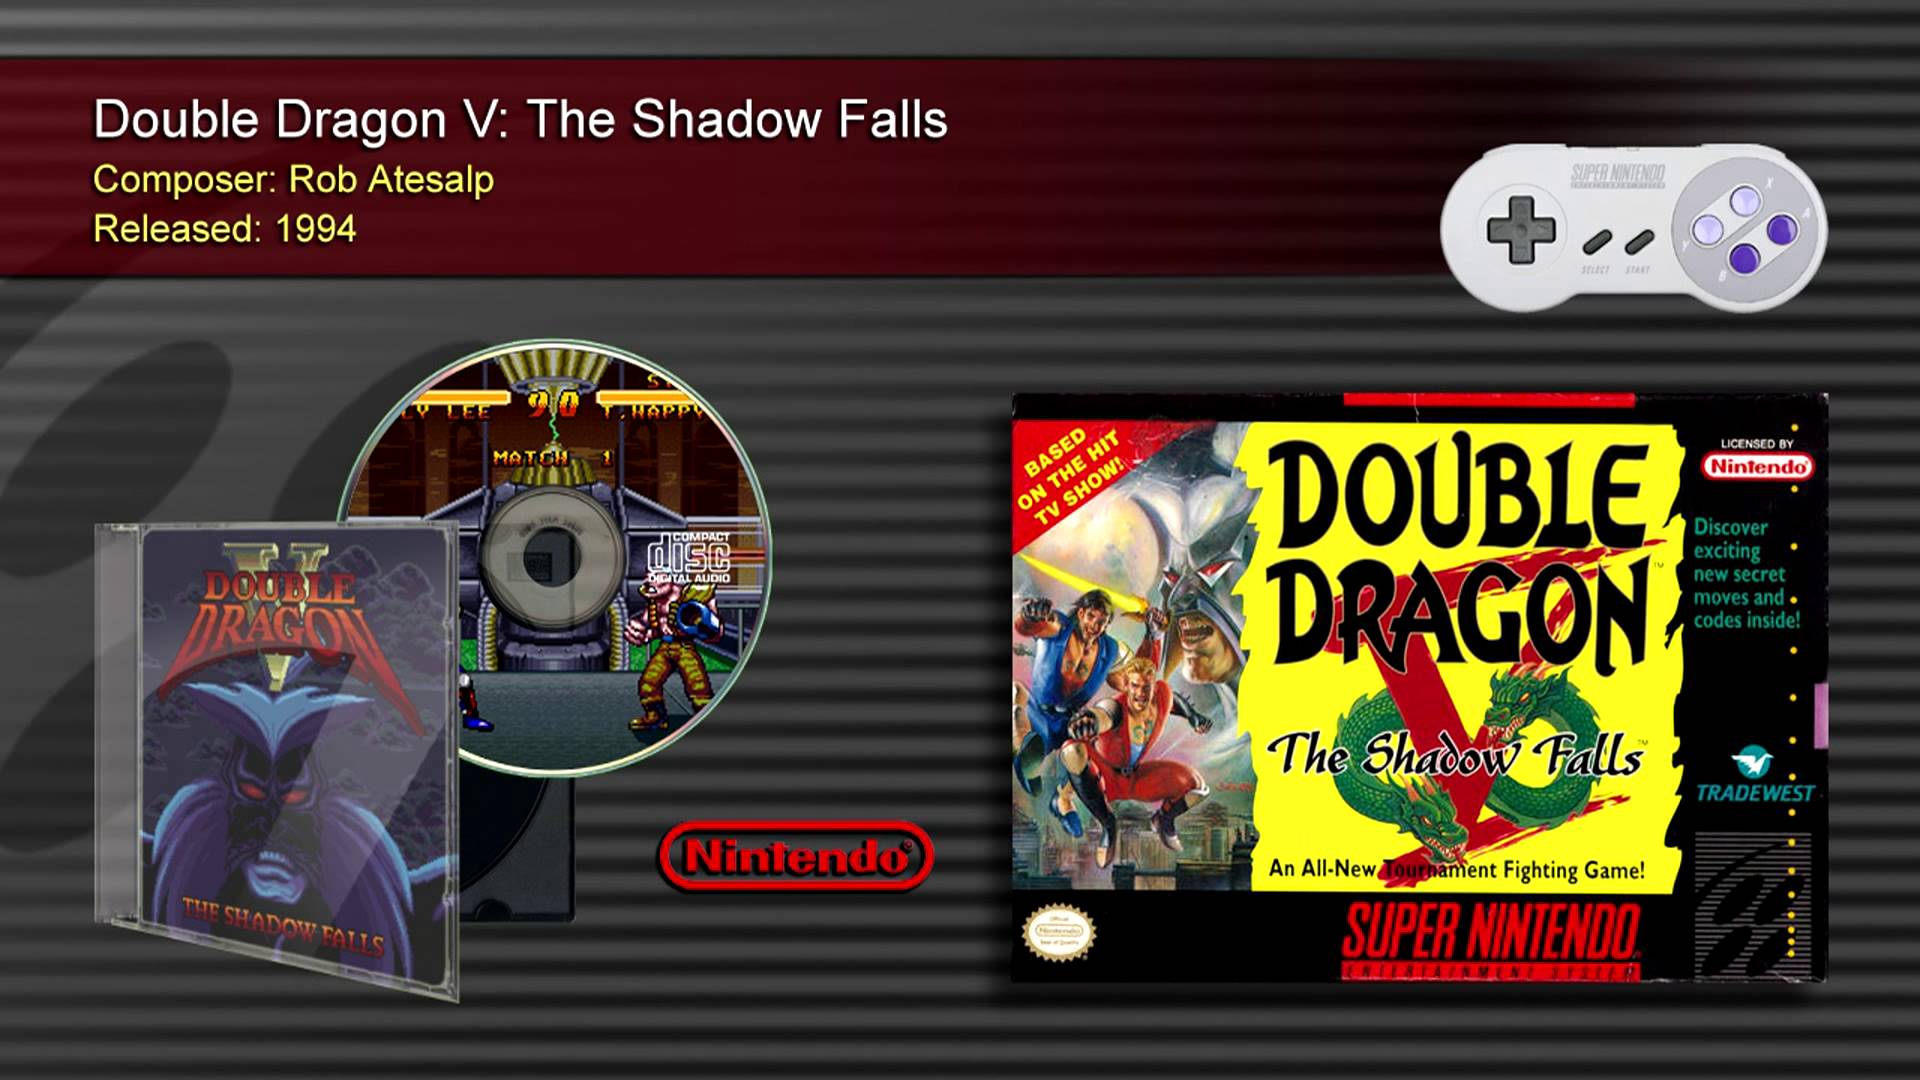 Double Dragon V: The Shadow Falls #22